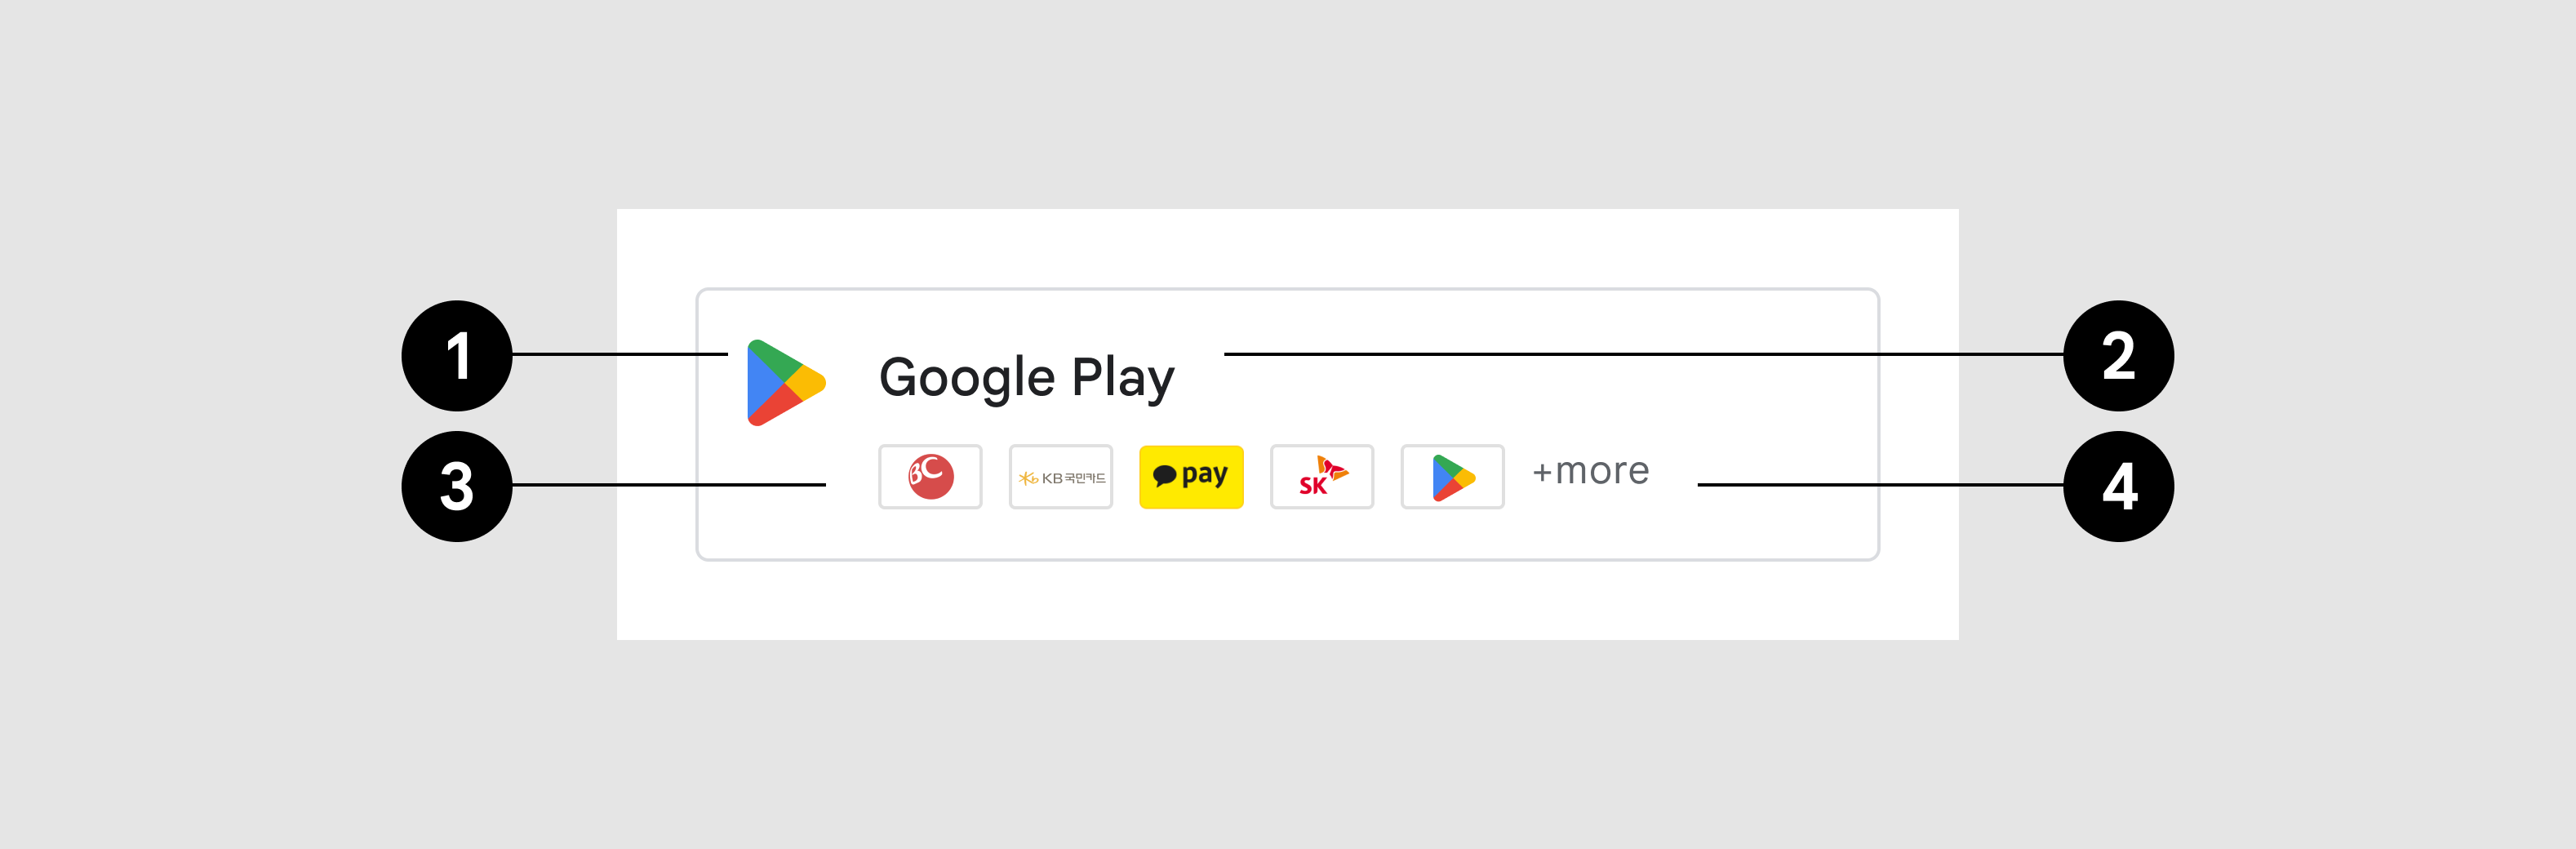 le bouton Google Play